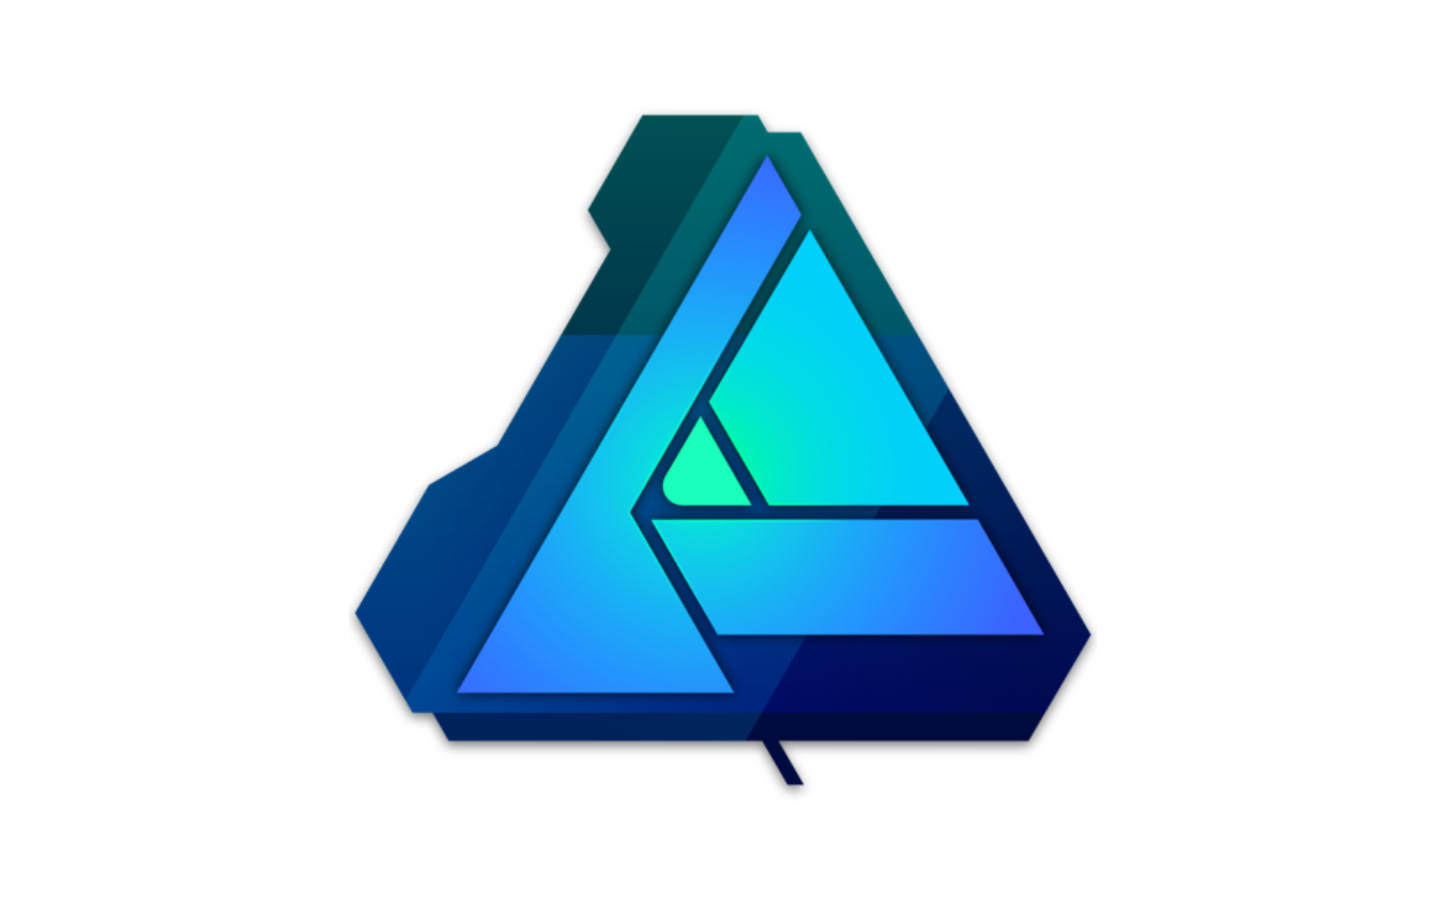 affinity-designer-logo.jpg